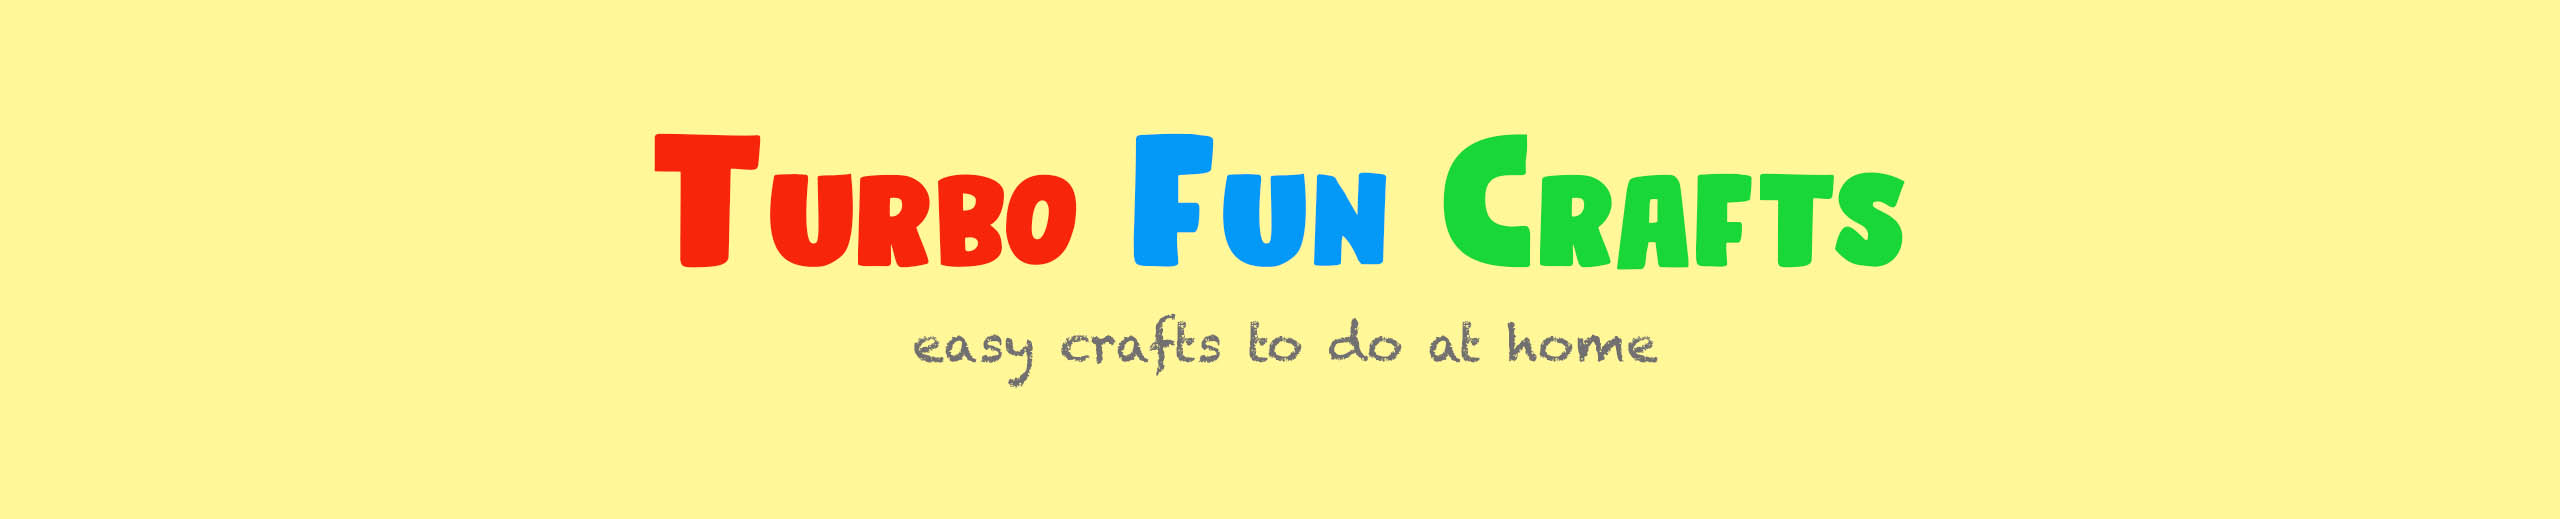 Explore amazing Paper Crafts and Origami Tutorials with Turbo Fun Crafts